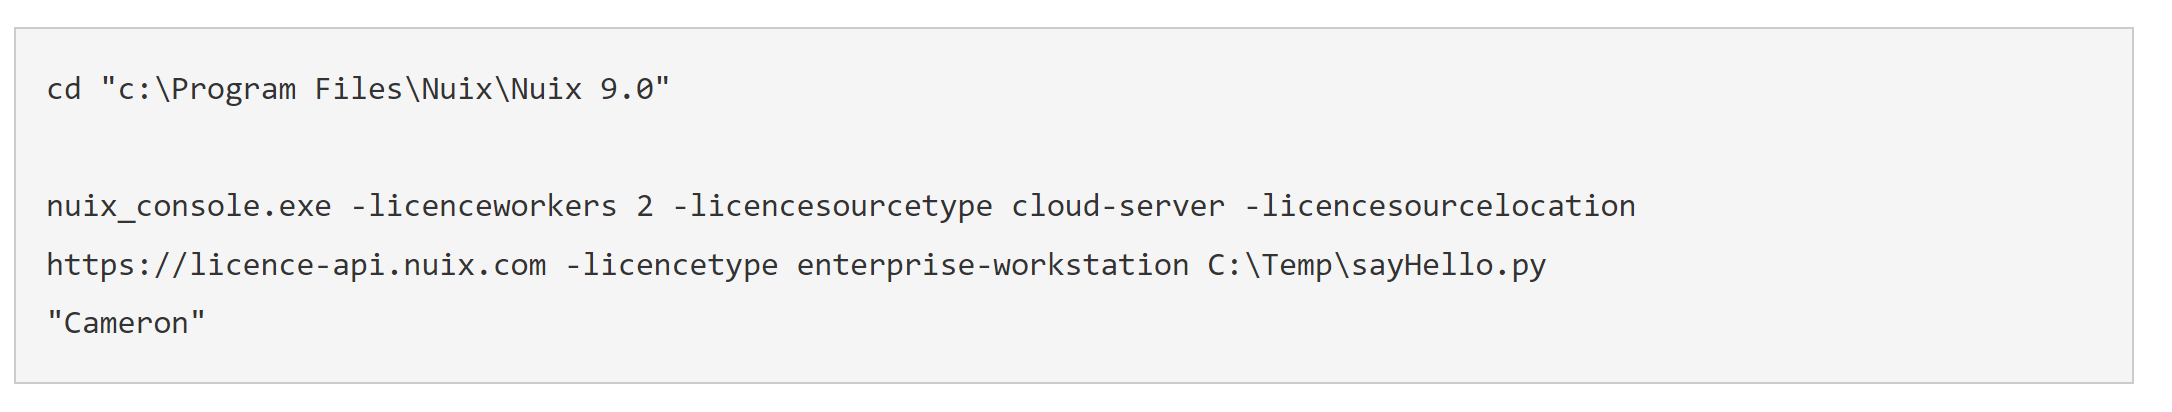 Run command: cd "c:\Program Files\Nuix\Nuix 9.0"  nuix_console.exe -licenceworkers 2 -licencesourcetype cloud-server -licencesourcelocation https://licence-api.nuix.com -licencetype enterprise-workstation C:\Temp\sayHello.py "Cameron"